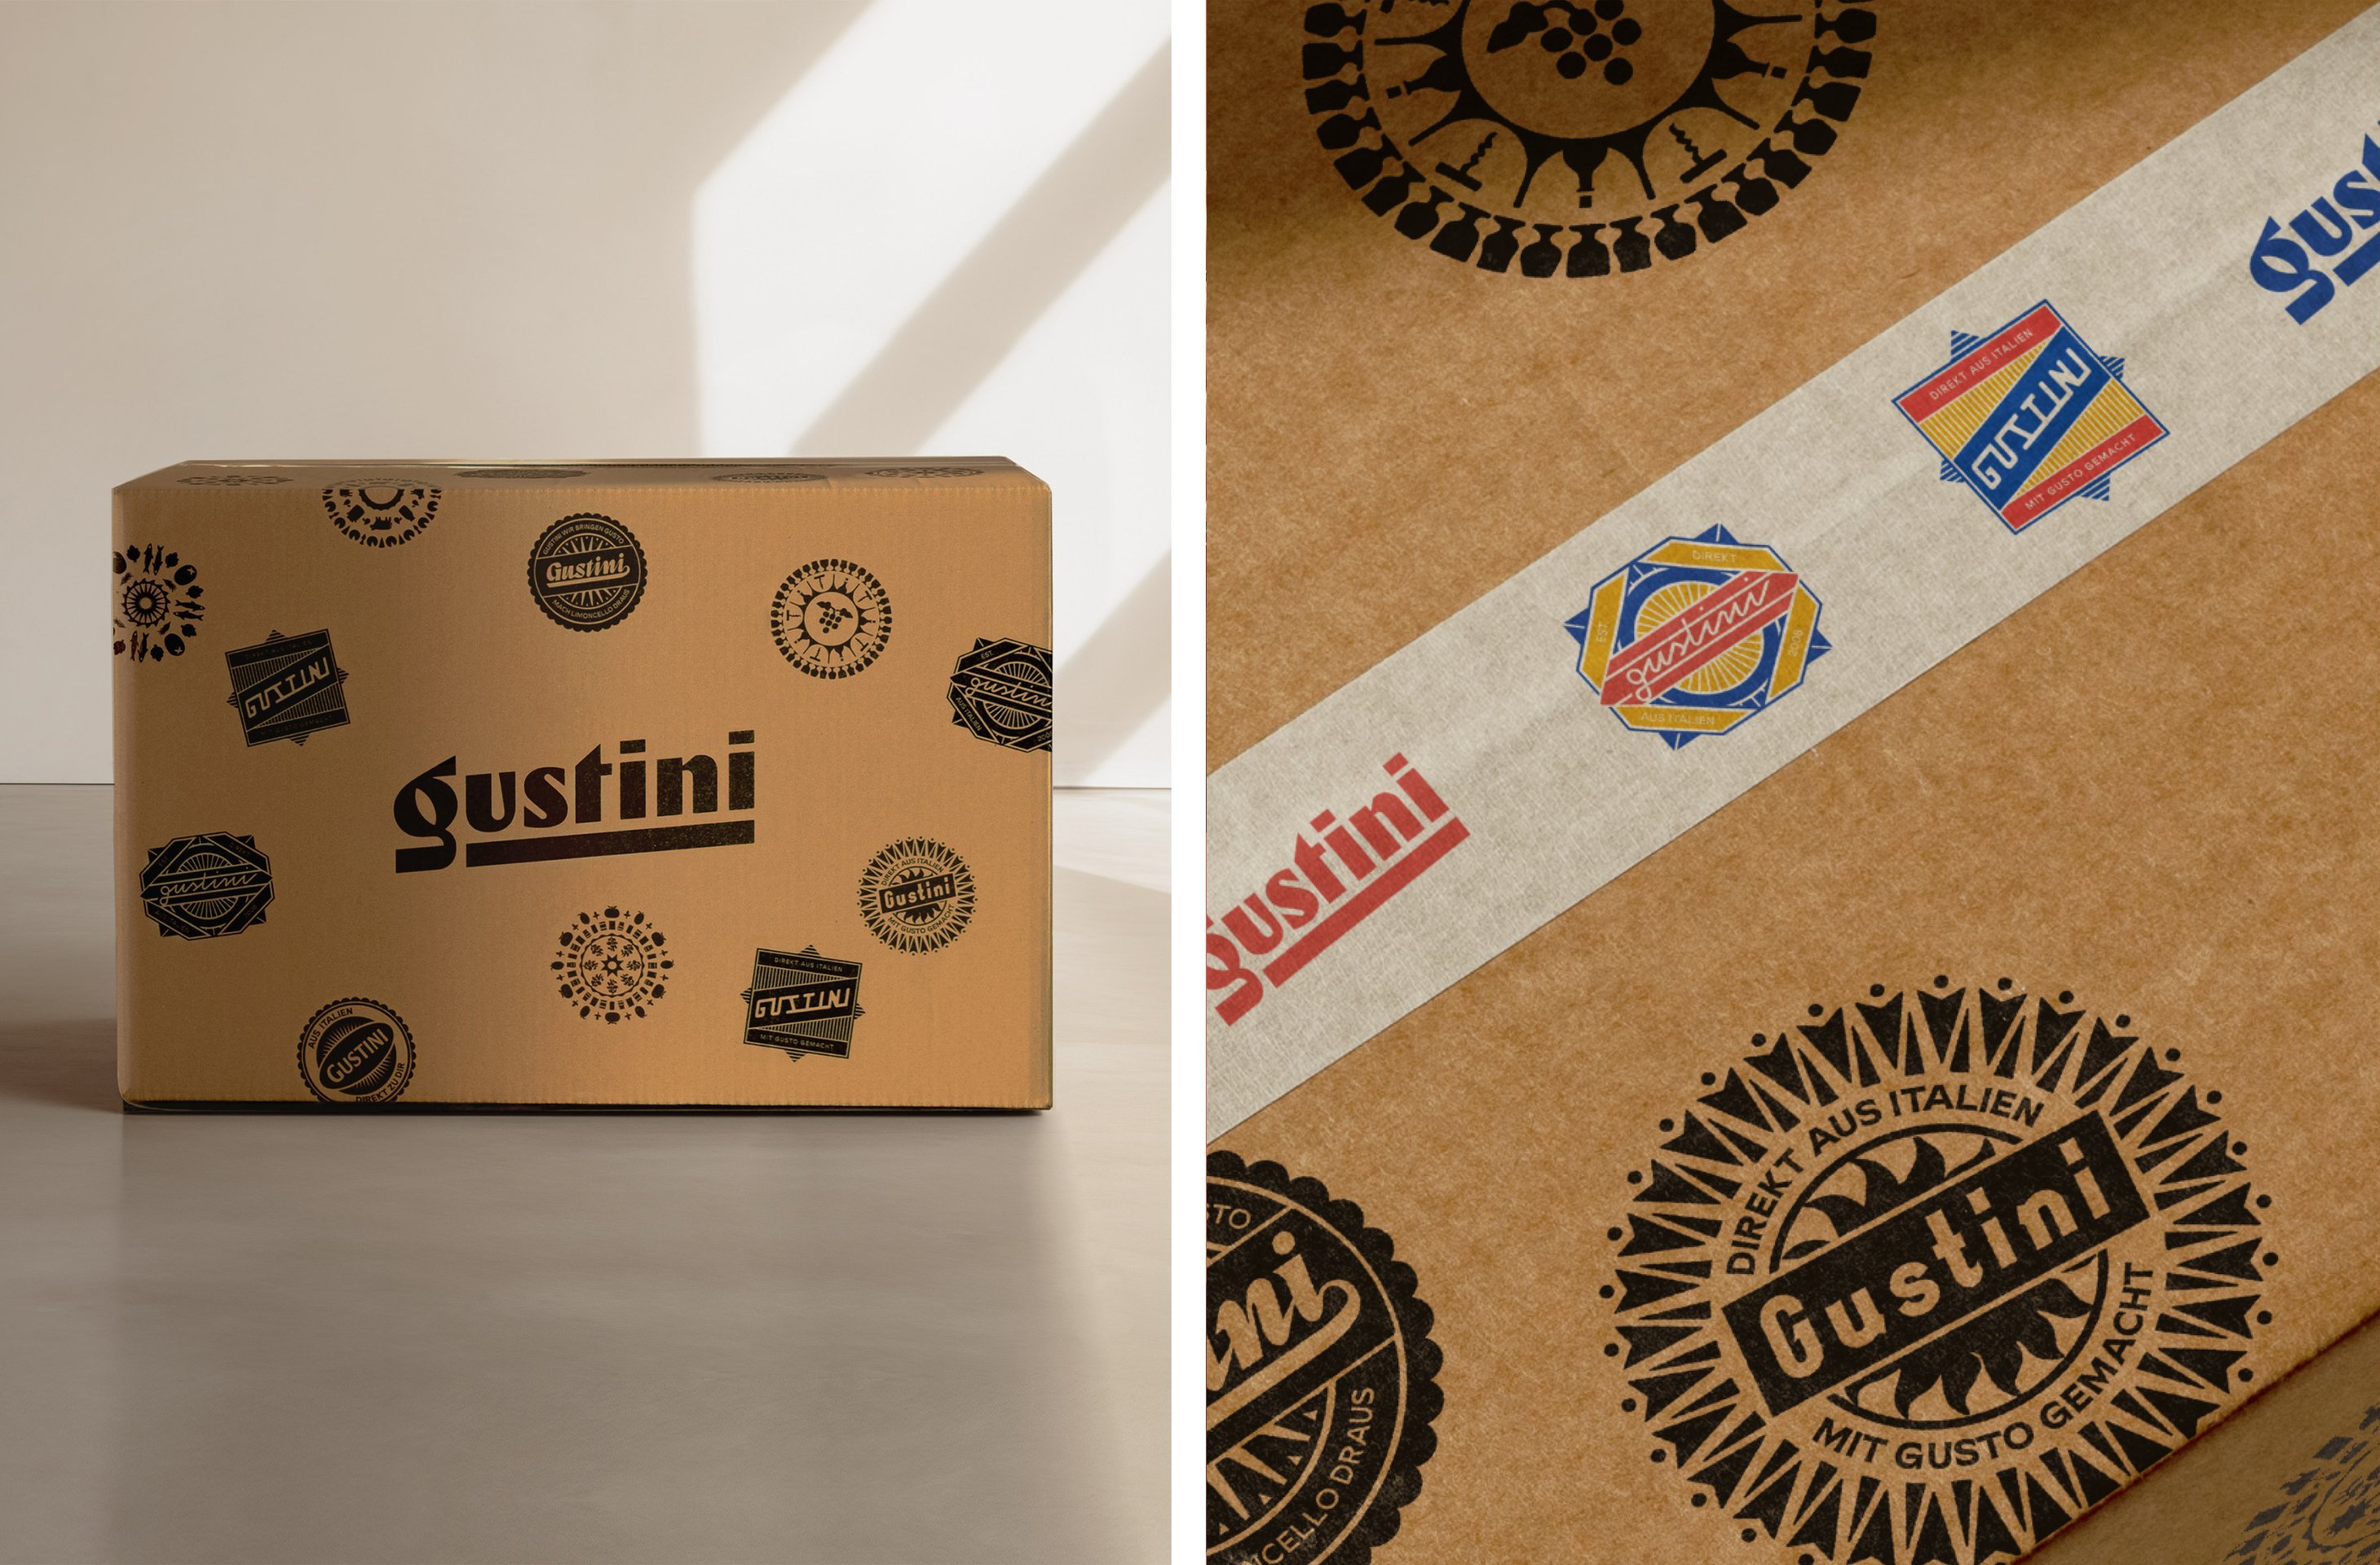 Logotype, brand identity and art direction by London-based design studio Koto for German online retailer of Italian food stuffs Gustini